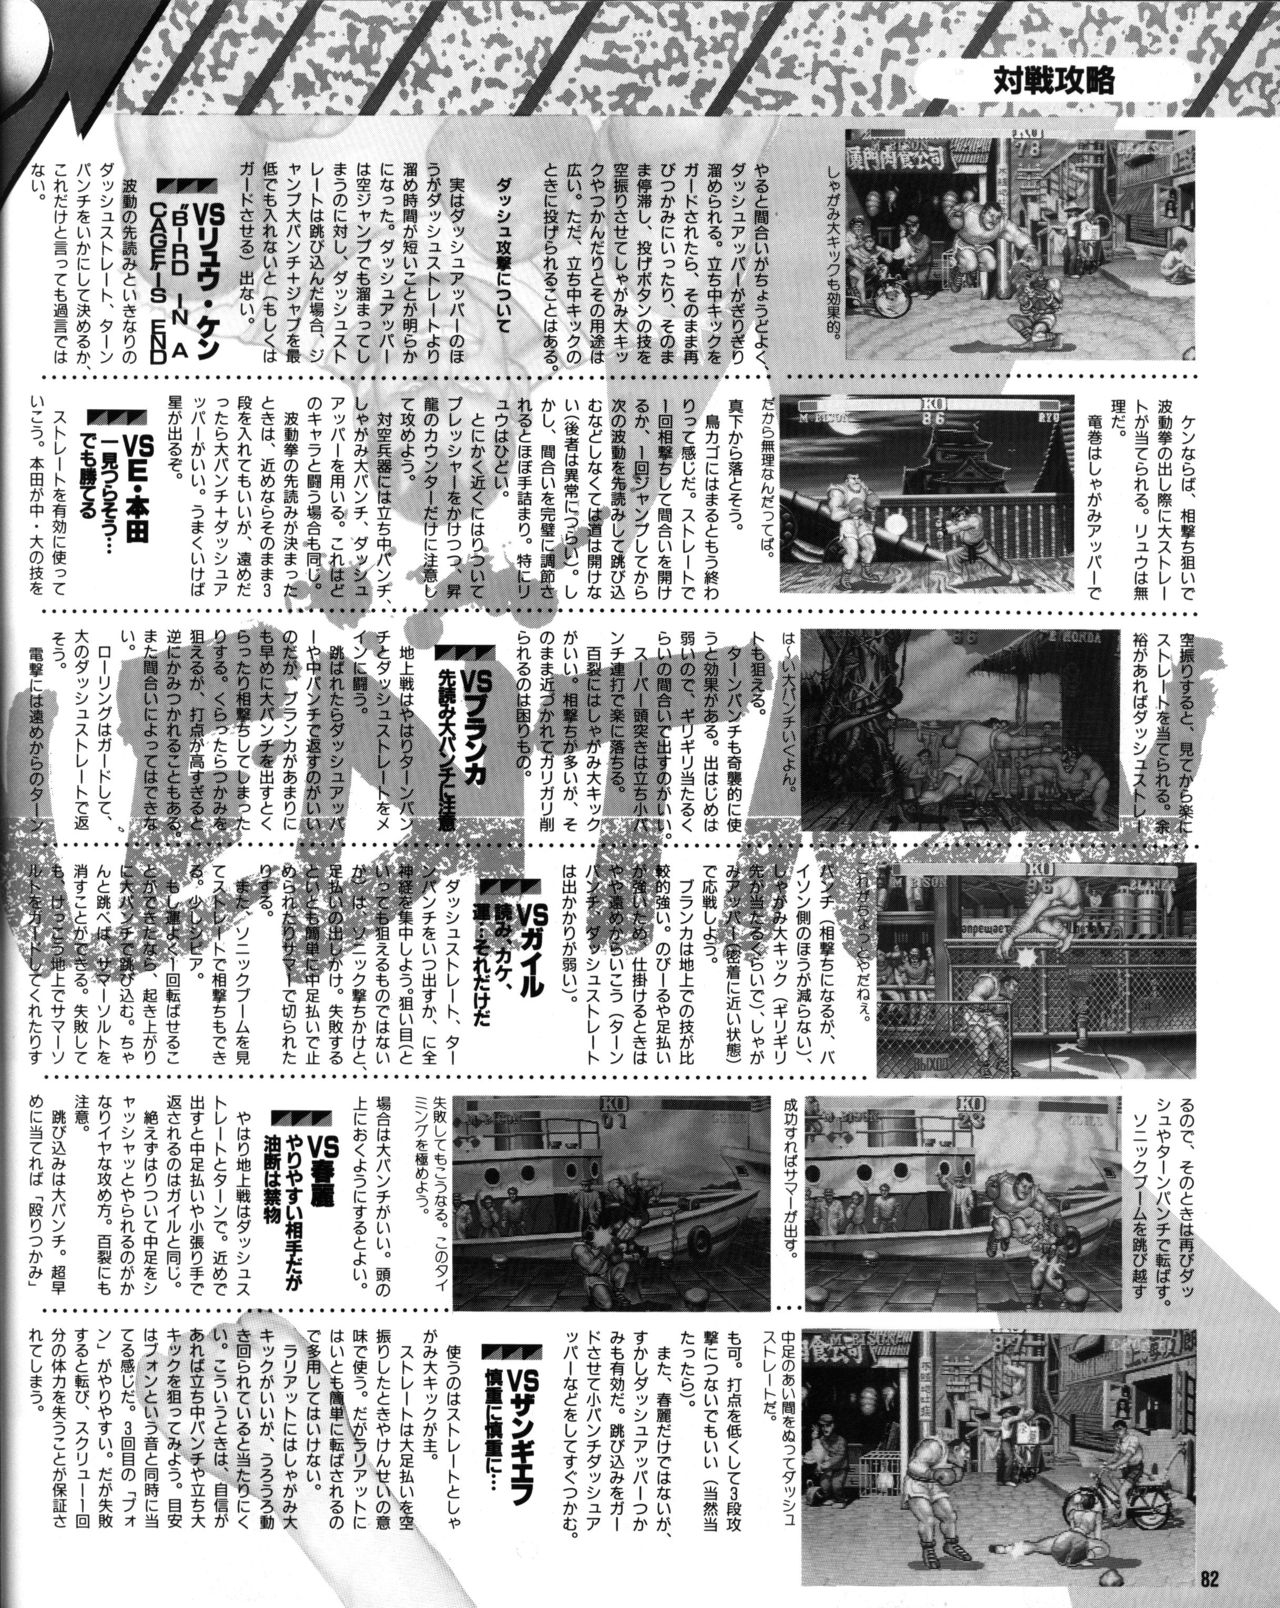 Street Fighter II Dash - Gamest special issue 77 83